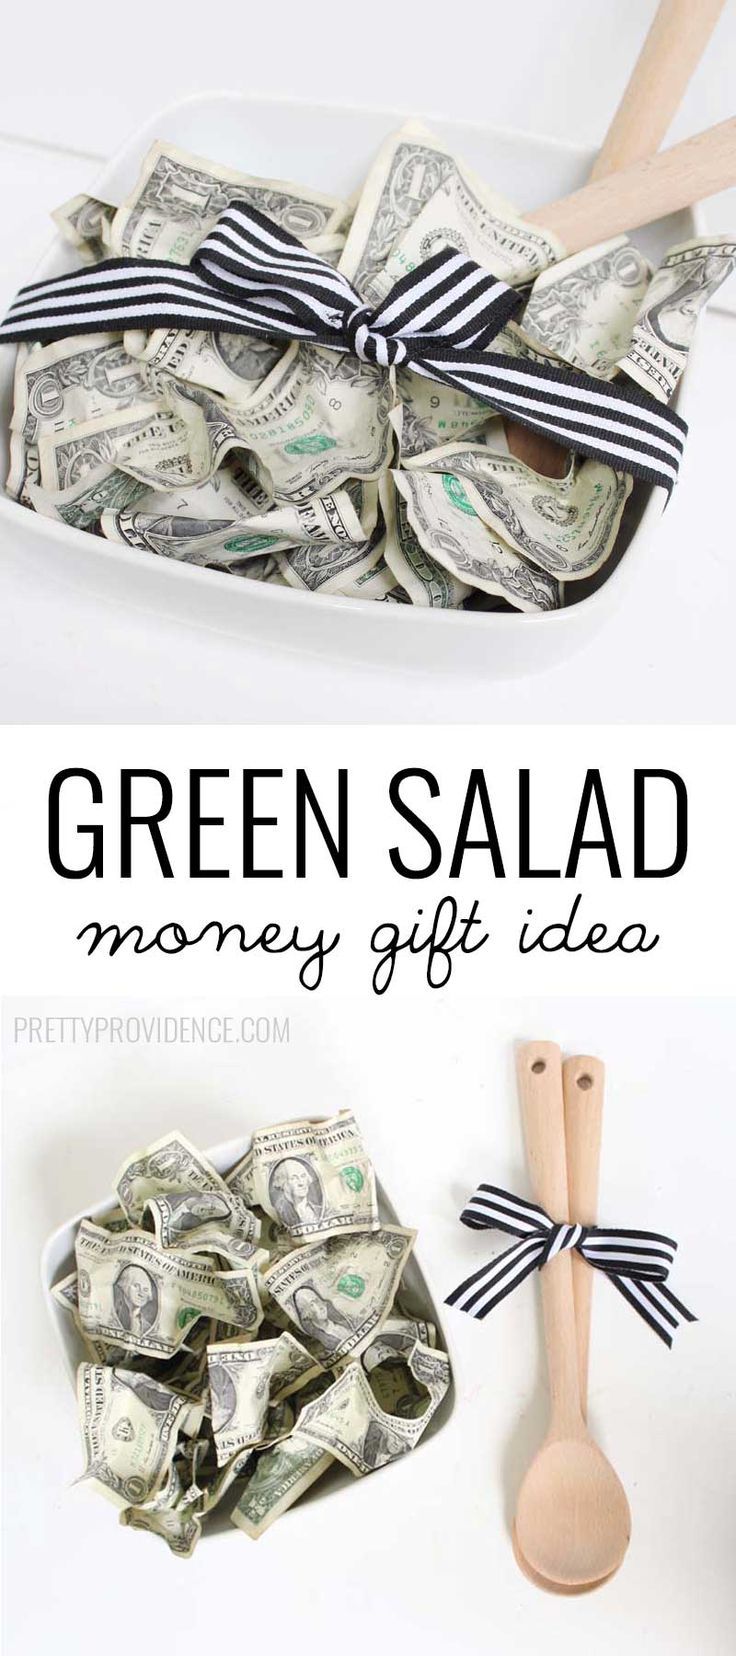 Salad Bowl + Dollar Bills = Cutest wedding gift EVER!